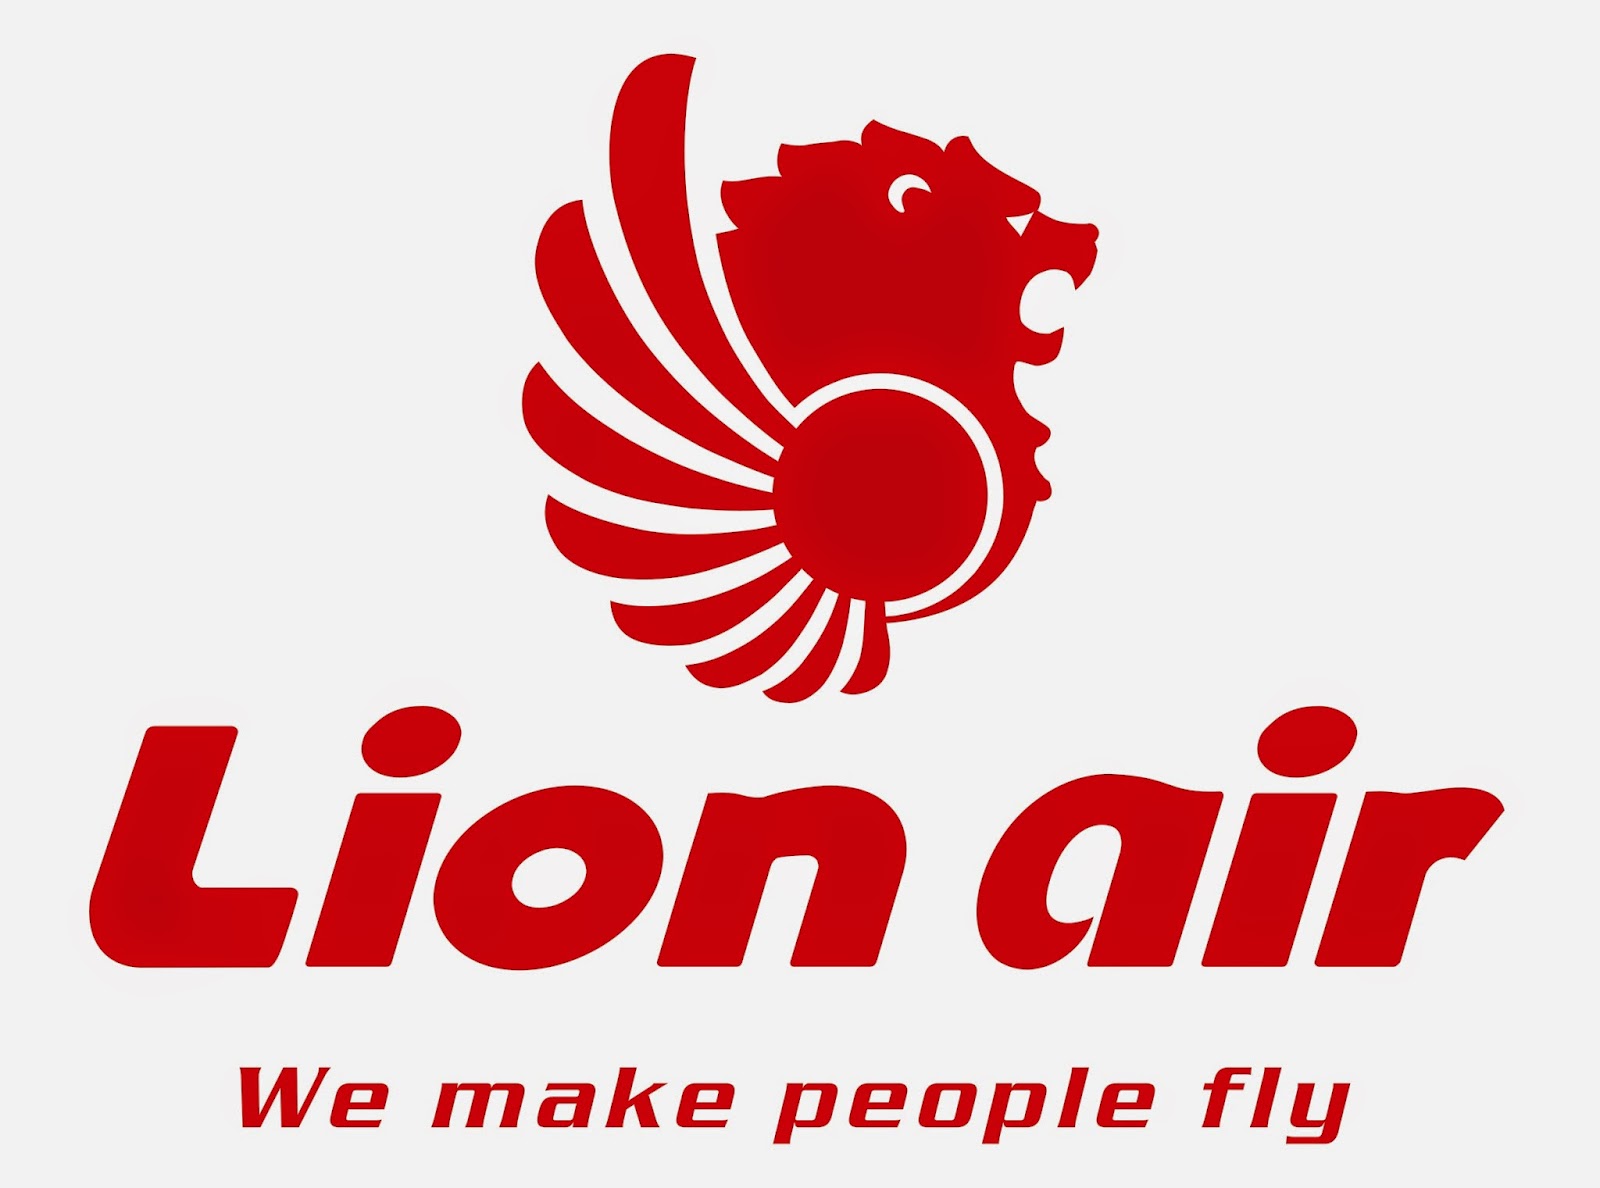 Lionair